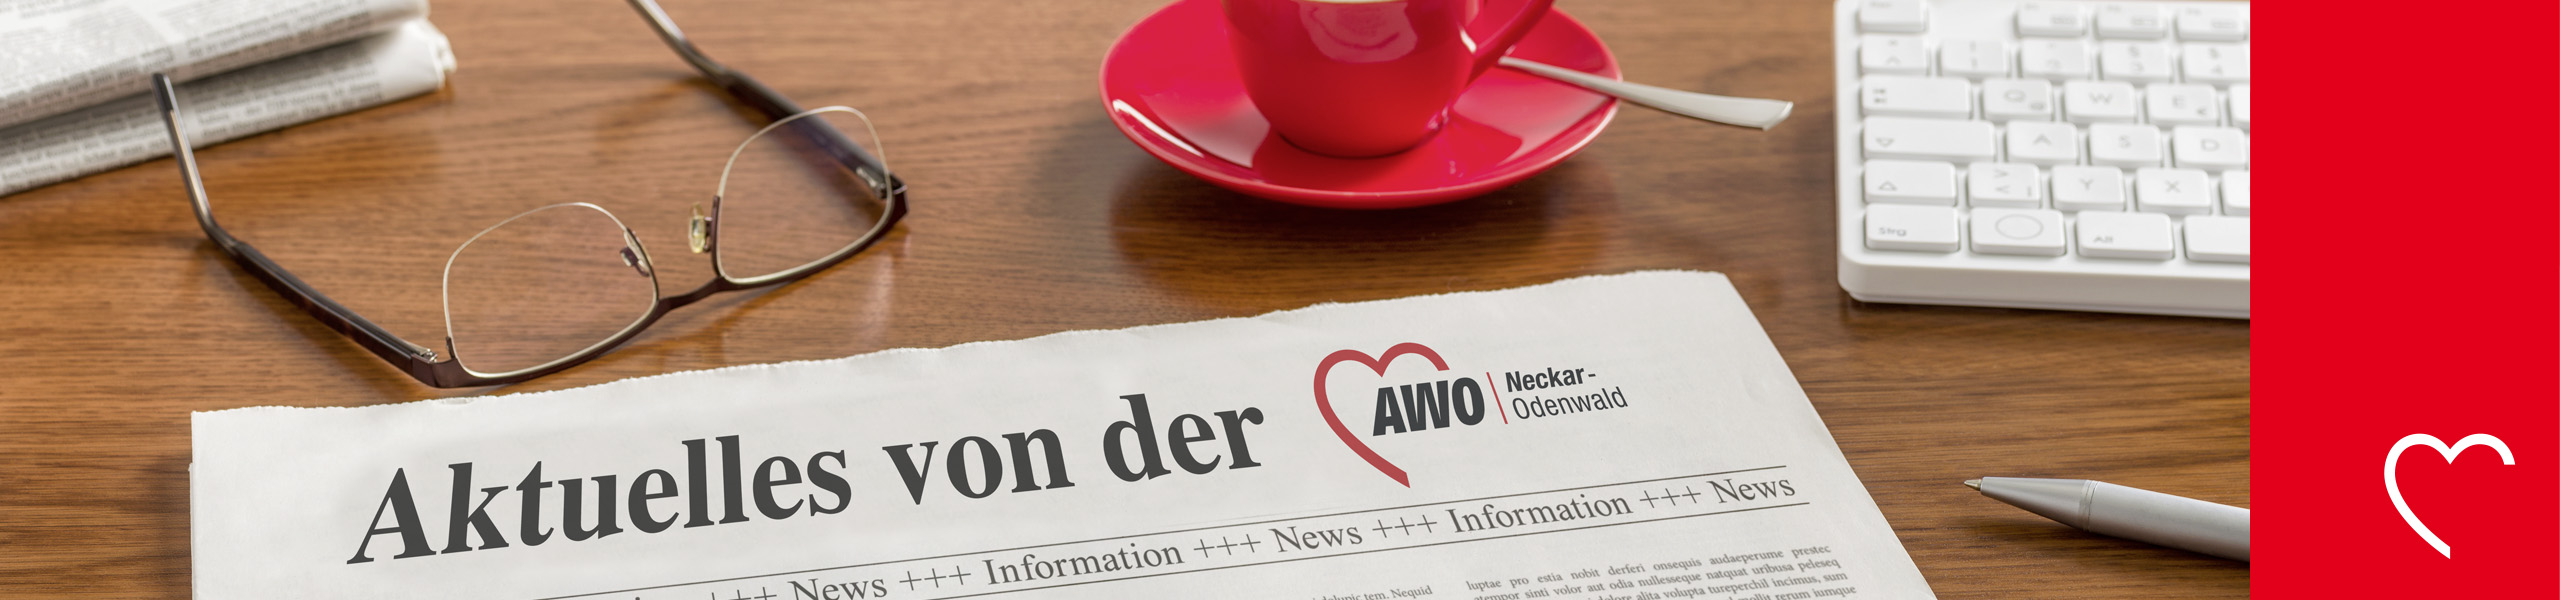 AWO Neckar-Odenwald gGmbH - Olga Zeiler in Ruhestand verabschiedet